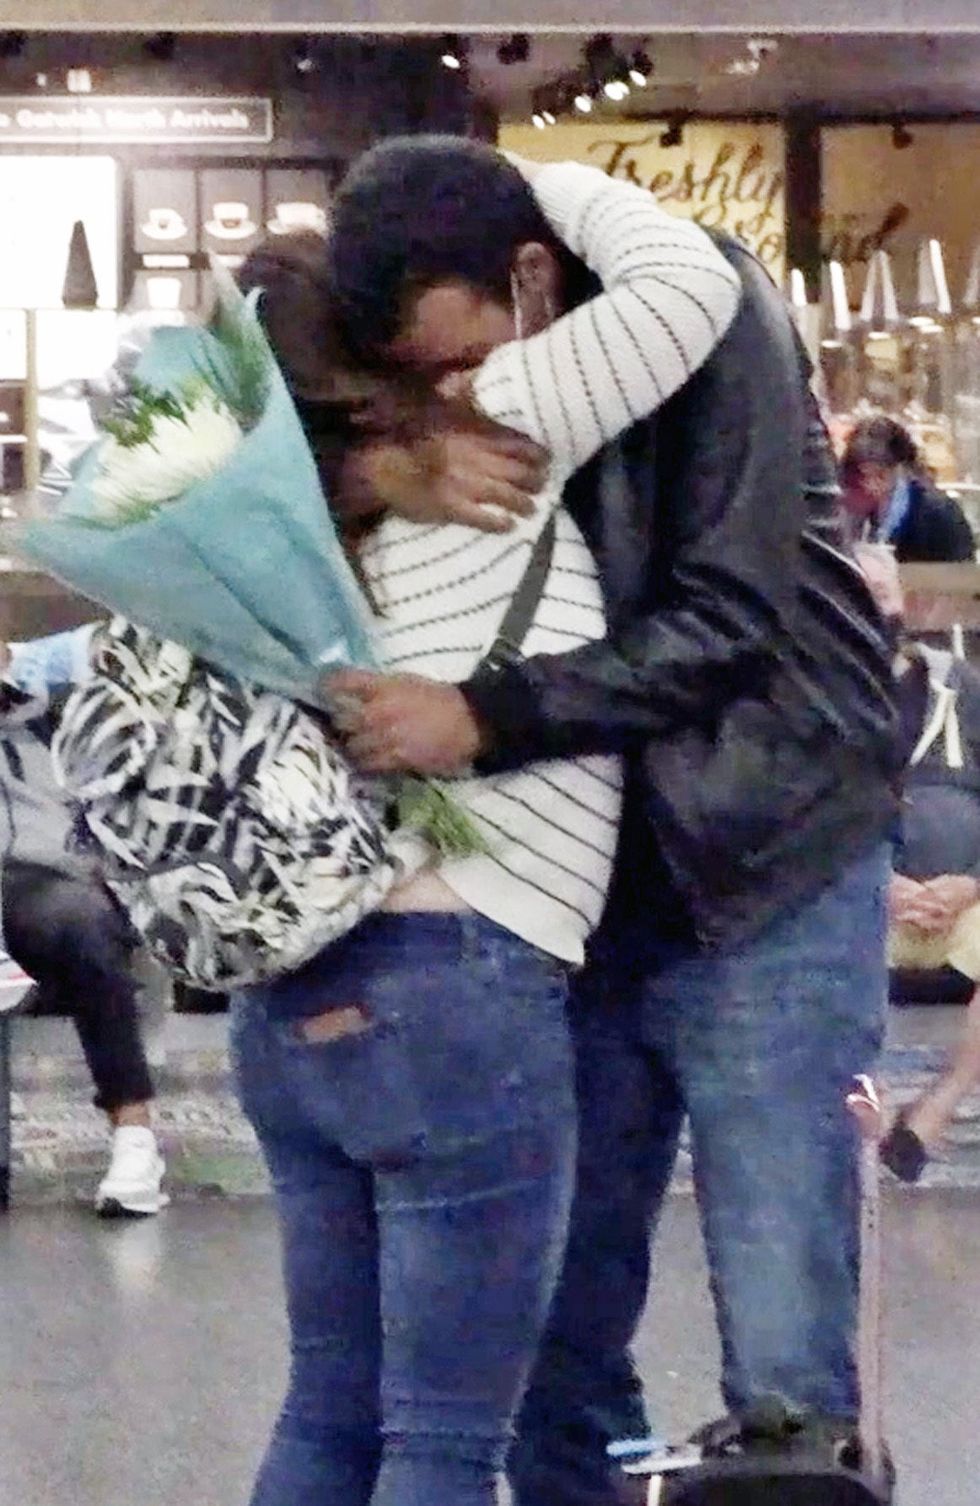 Cristina and Ben hug after being reunited (Karis Pearson/PA)